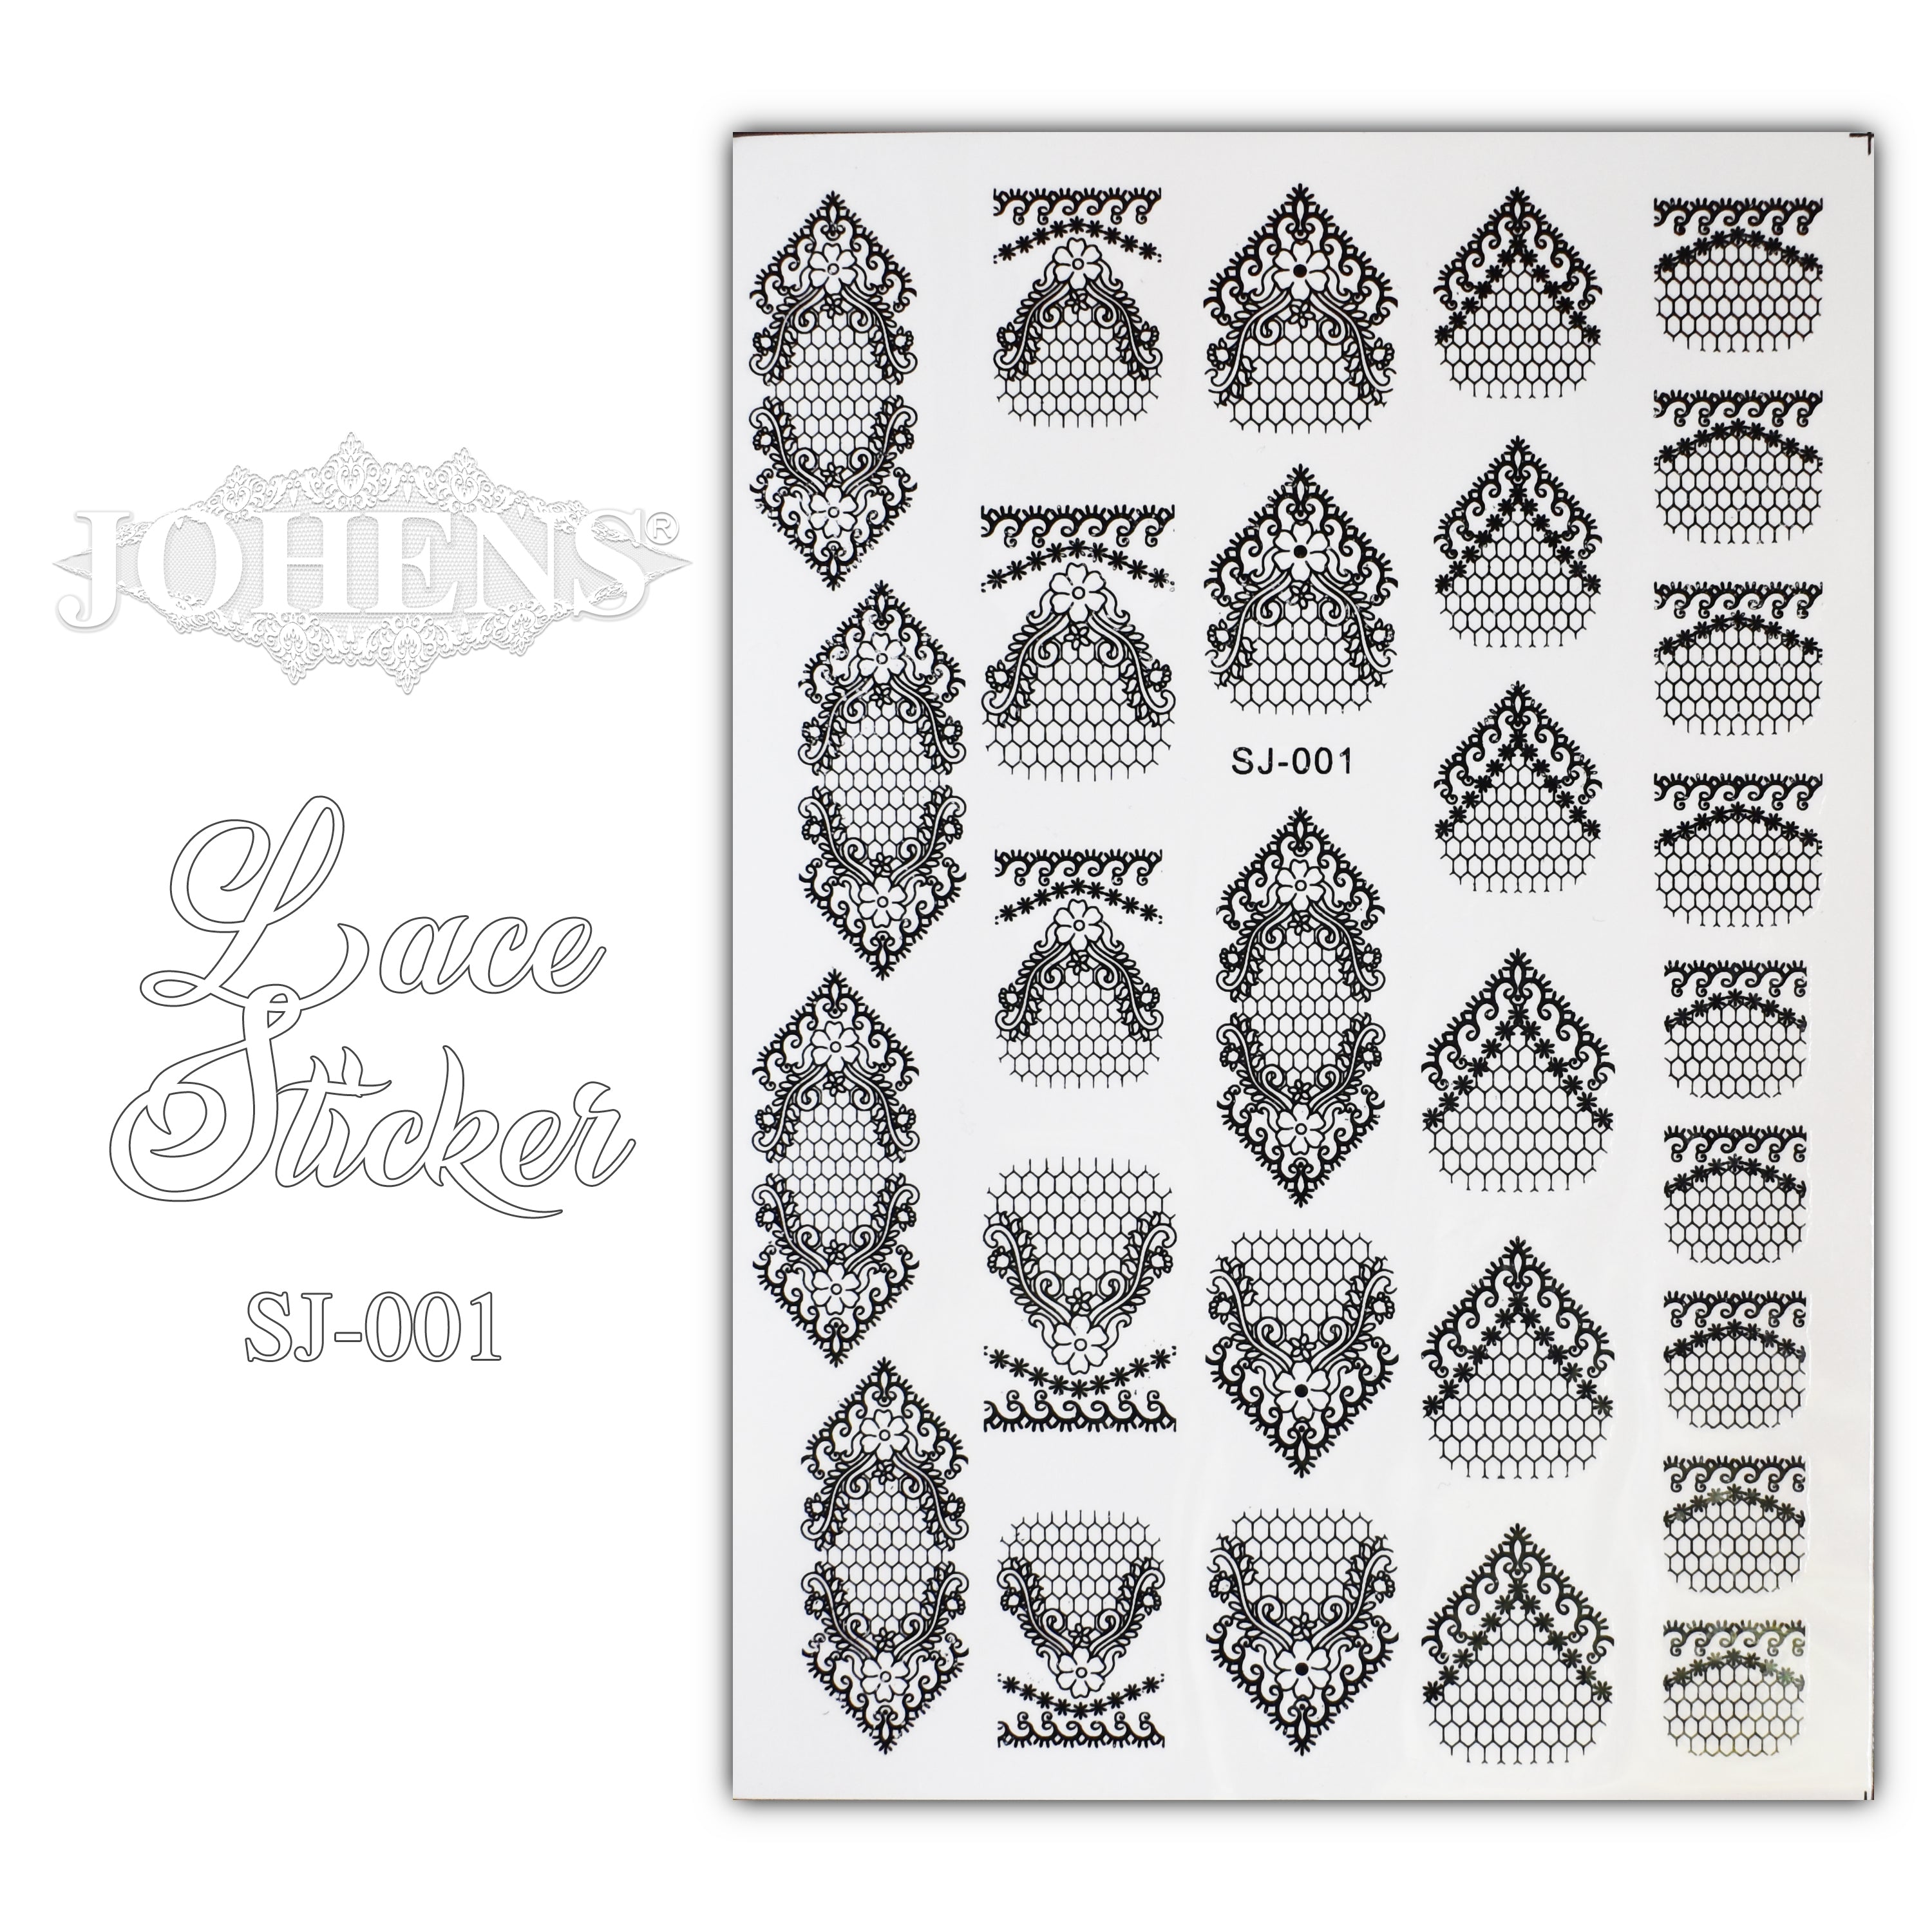 Lace Sticker SJ-001 (water decals)